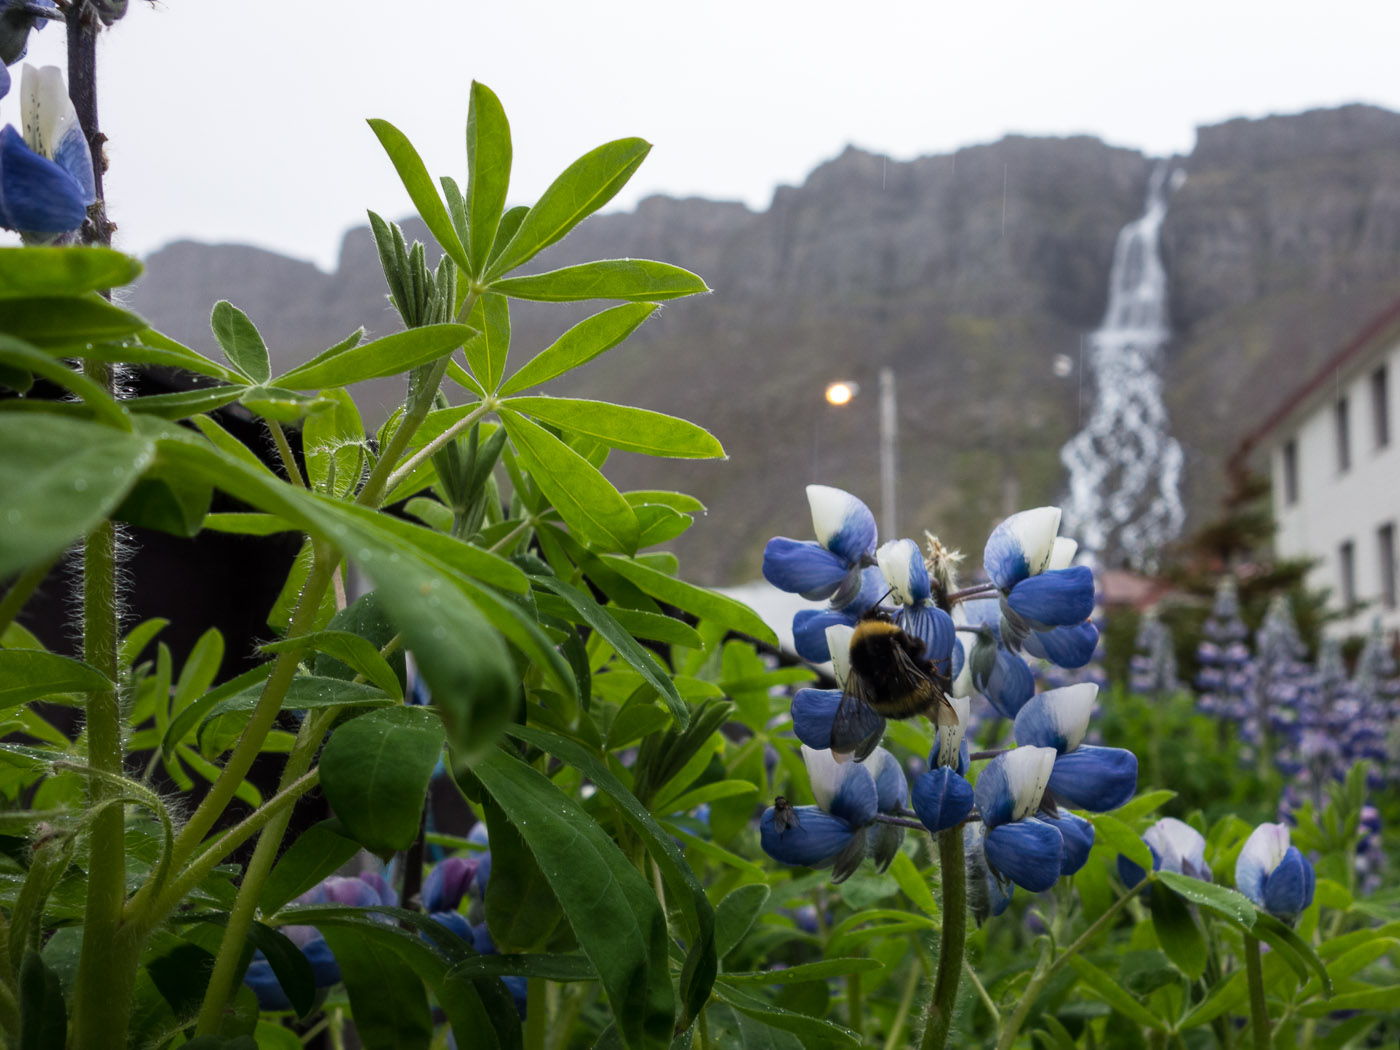 Djúpavík. Week 4. - Spring time, or already summer time? (16 June till 22 June 2014)